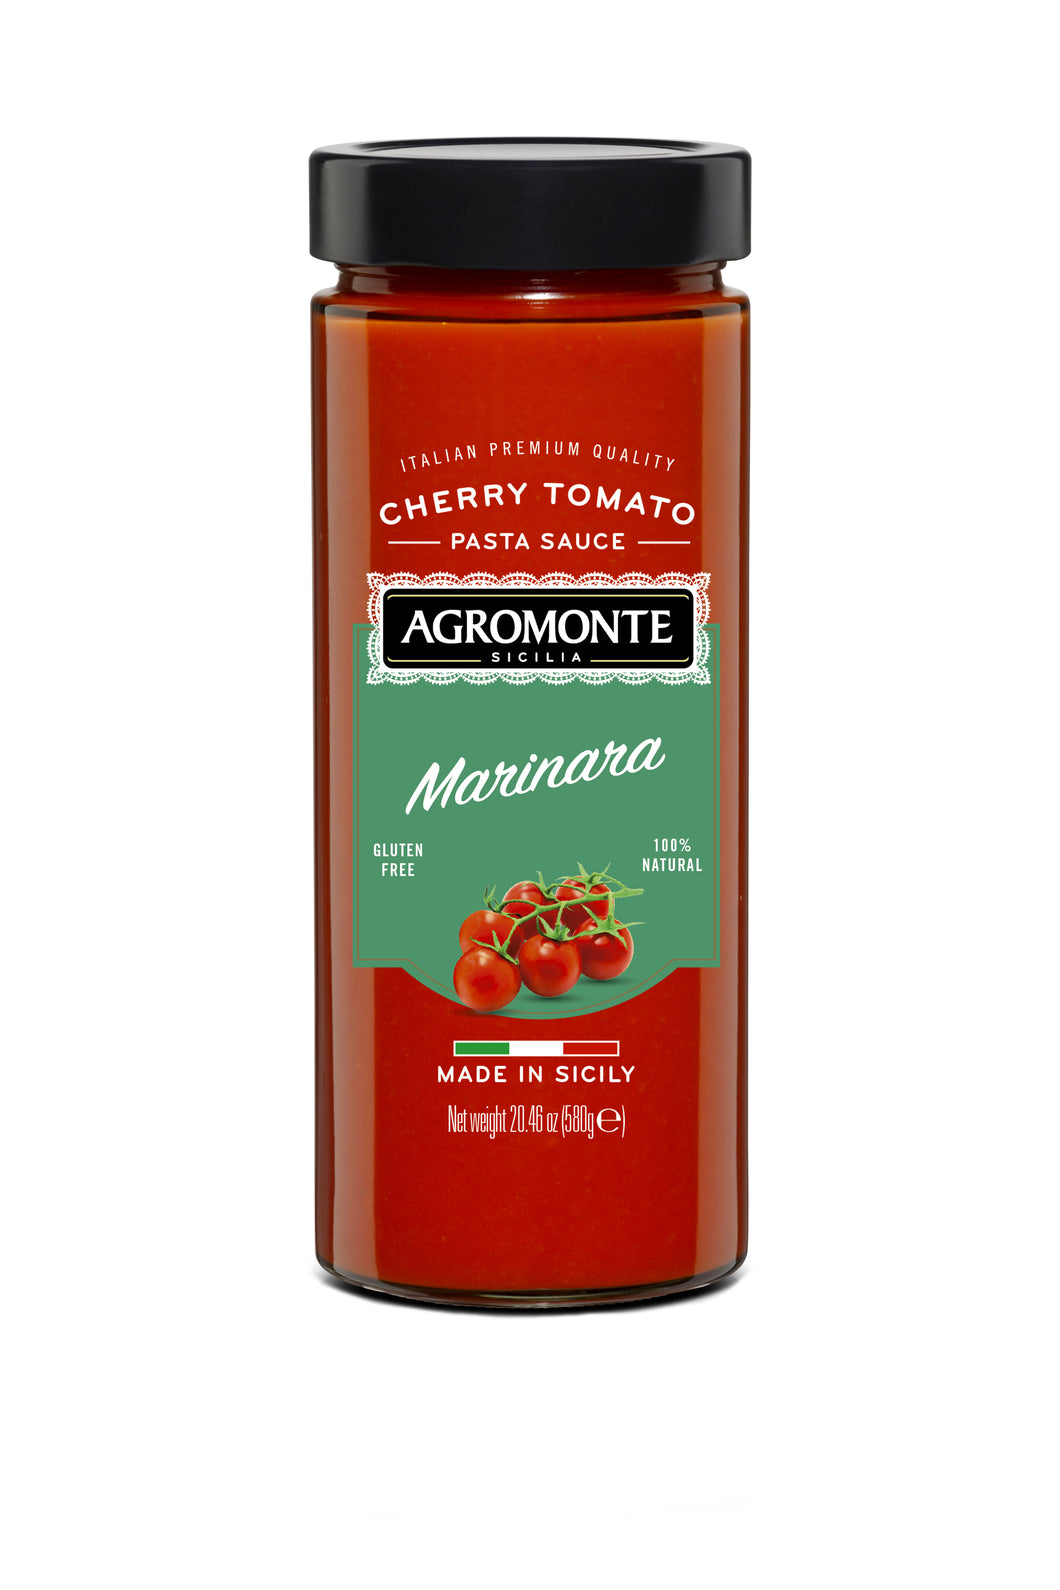 AGROMONTE Marinara Cherry Tomato Pasta Sauce, 20.46oz - International Loft